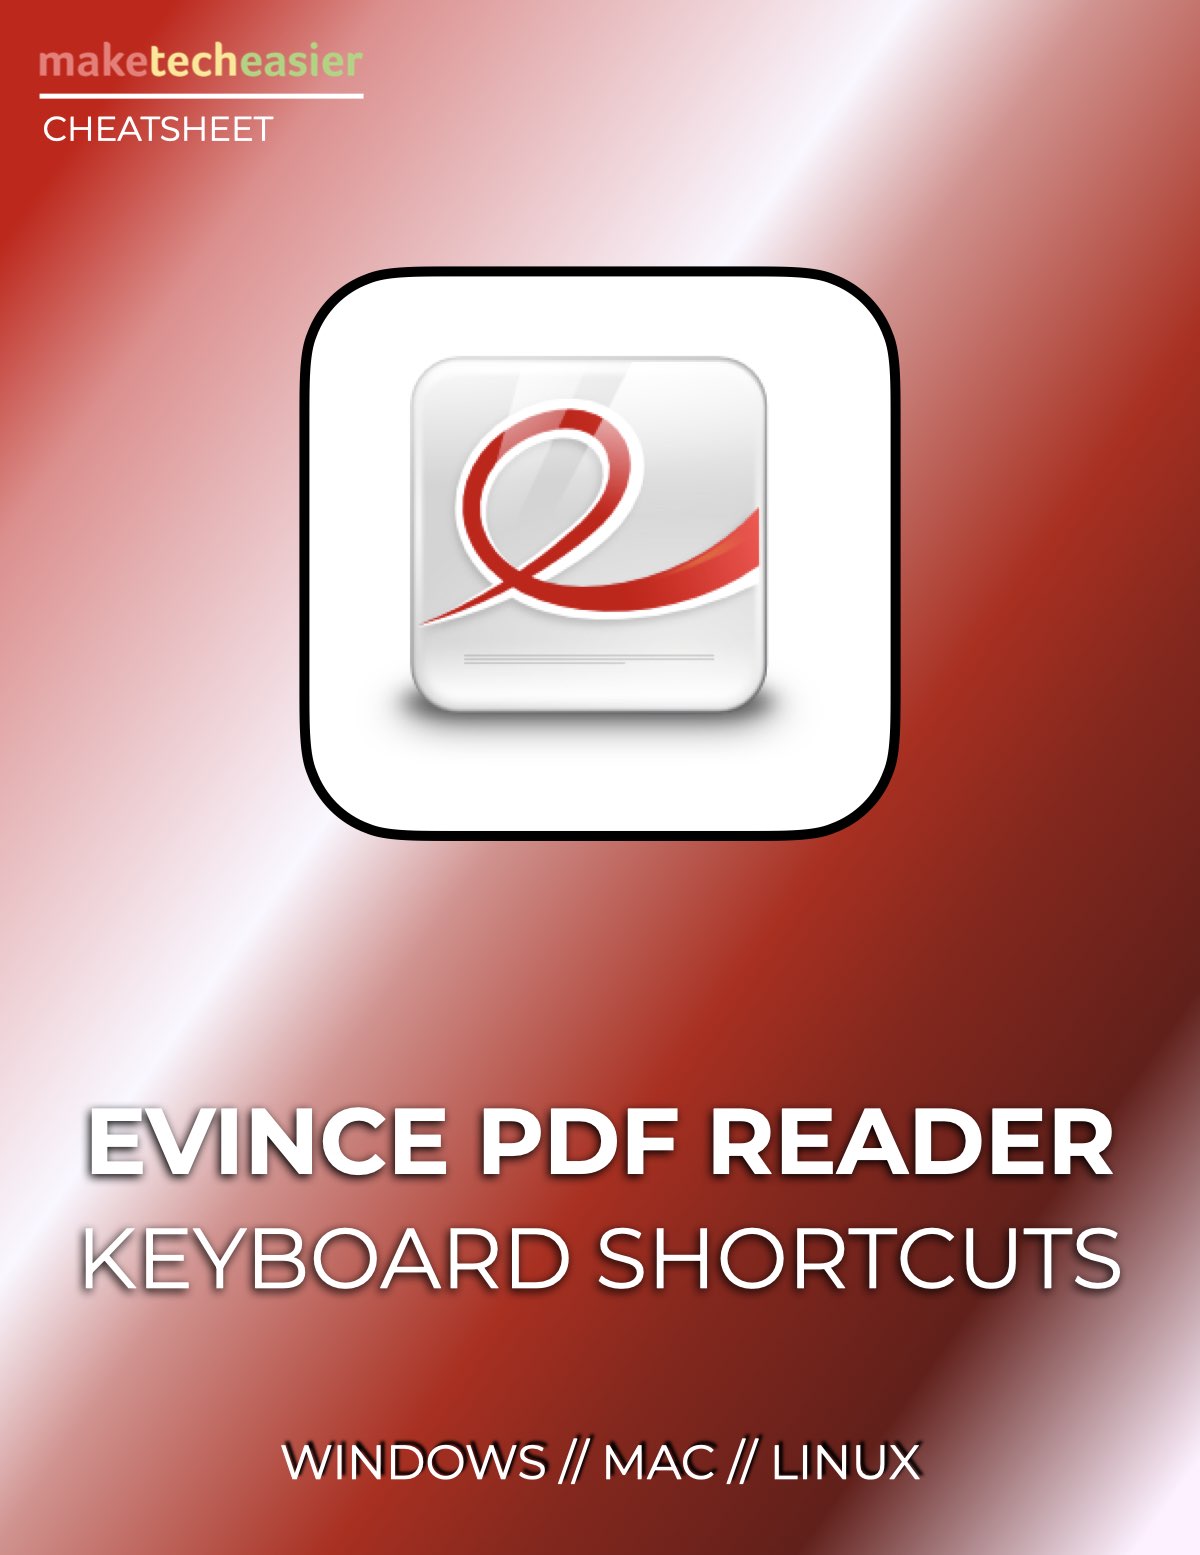 Evince PDF Reader Keyboard Shortcuts